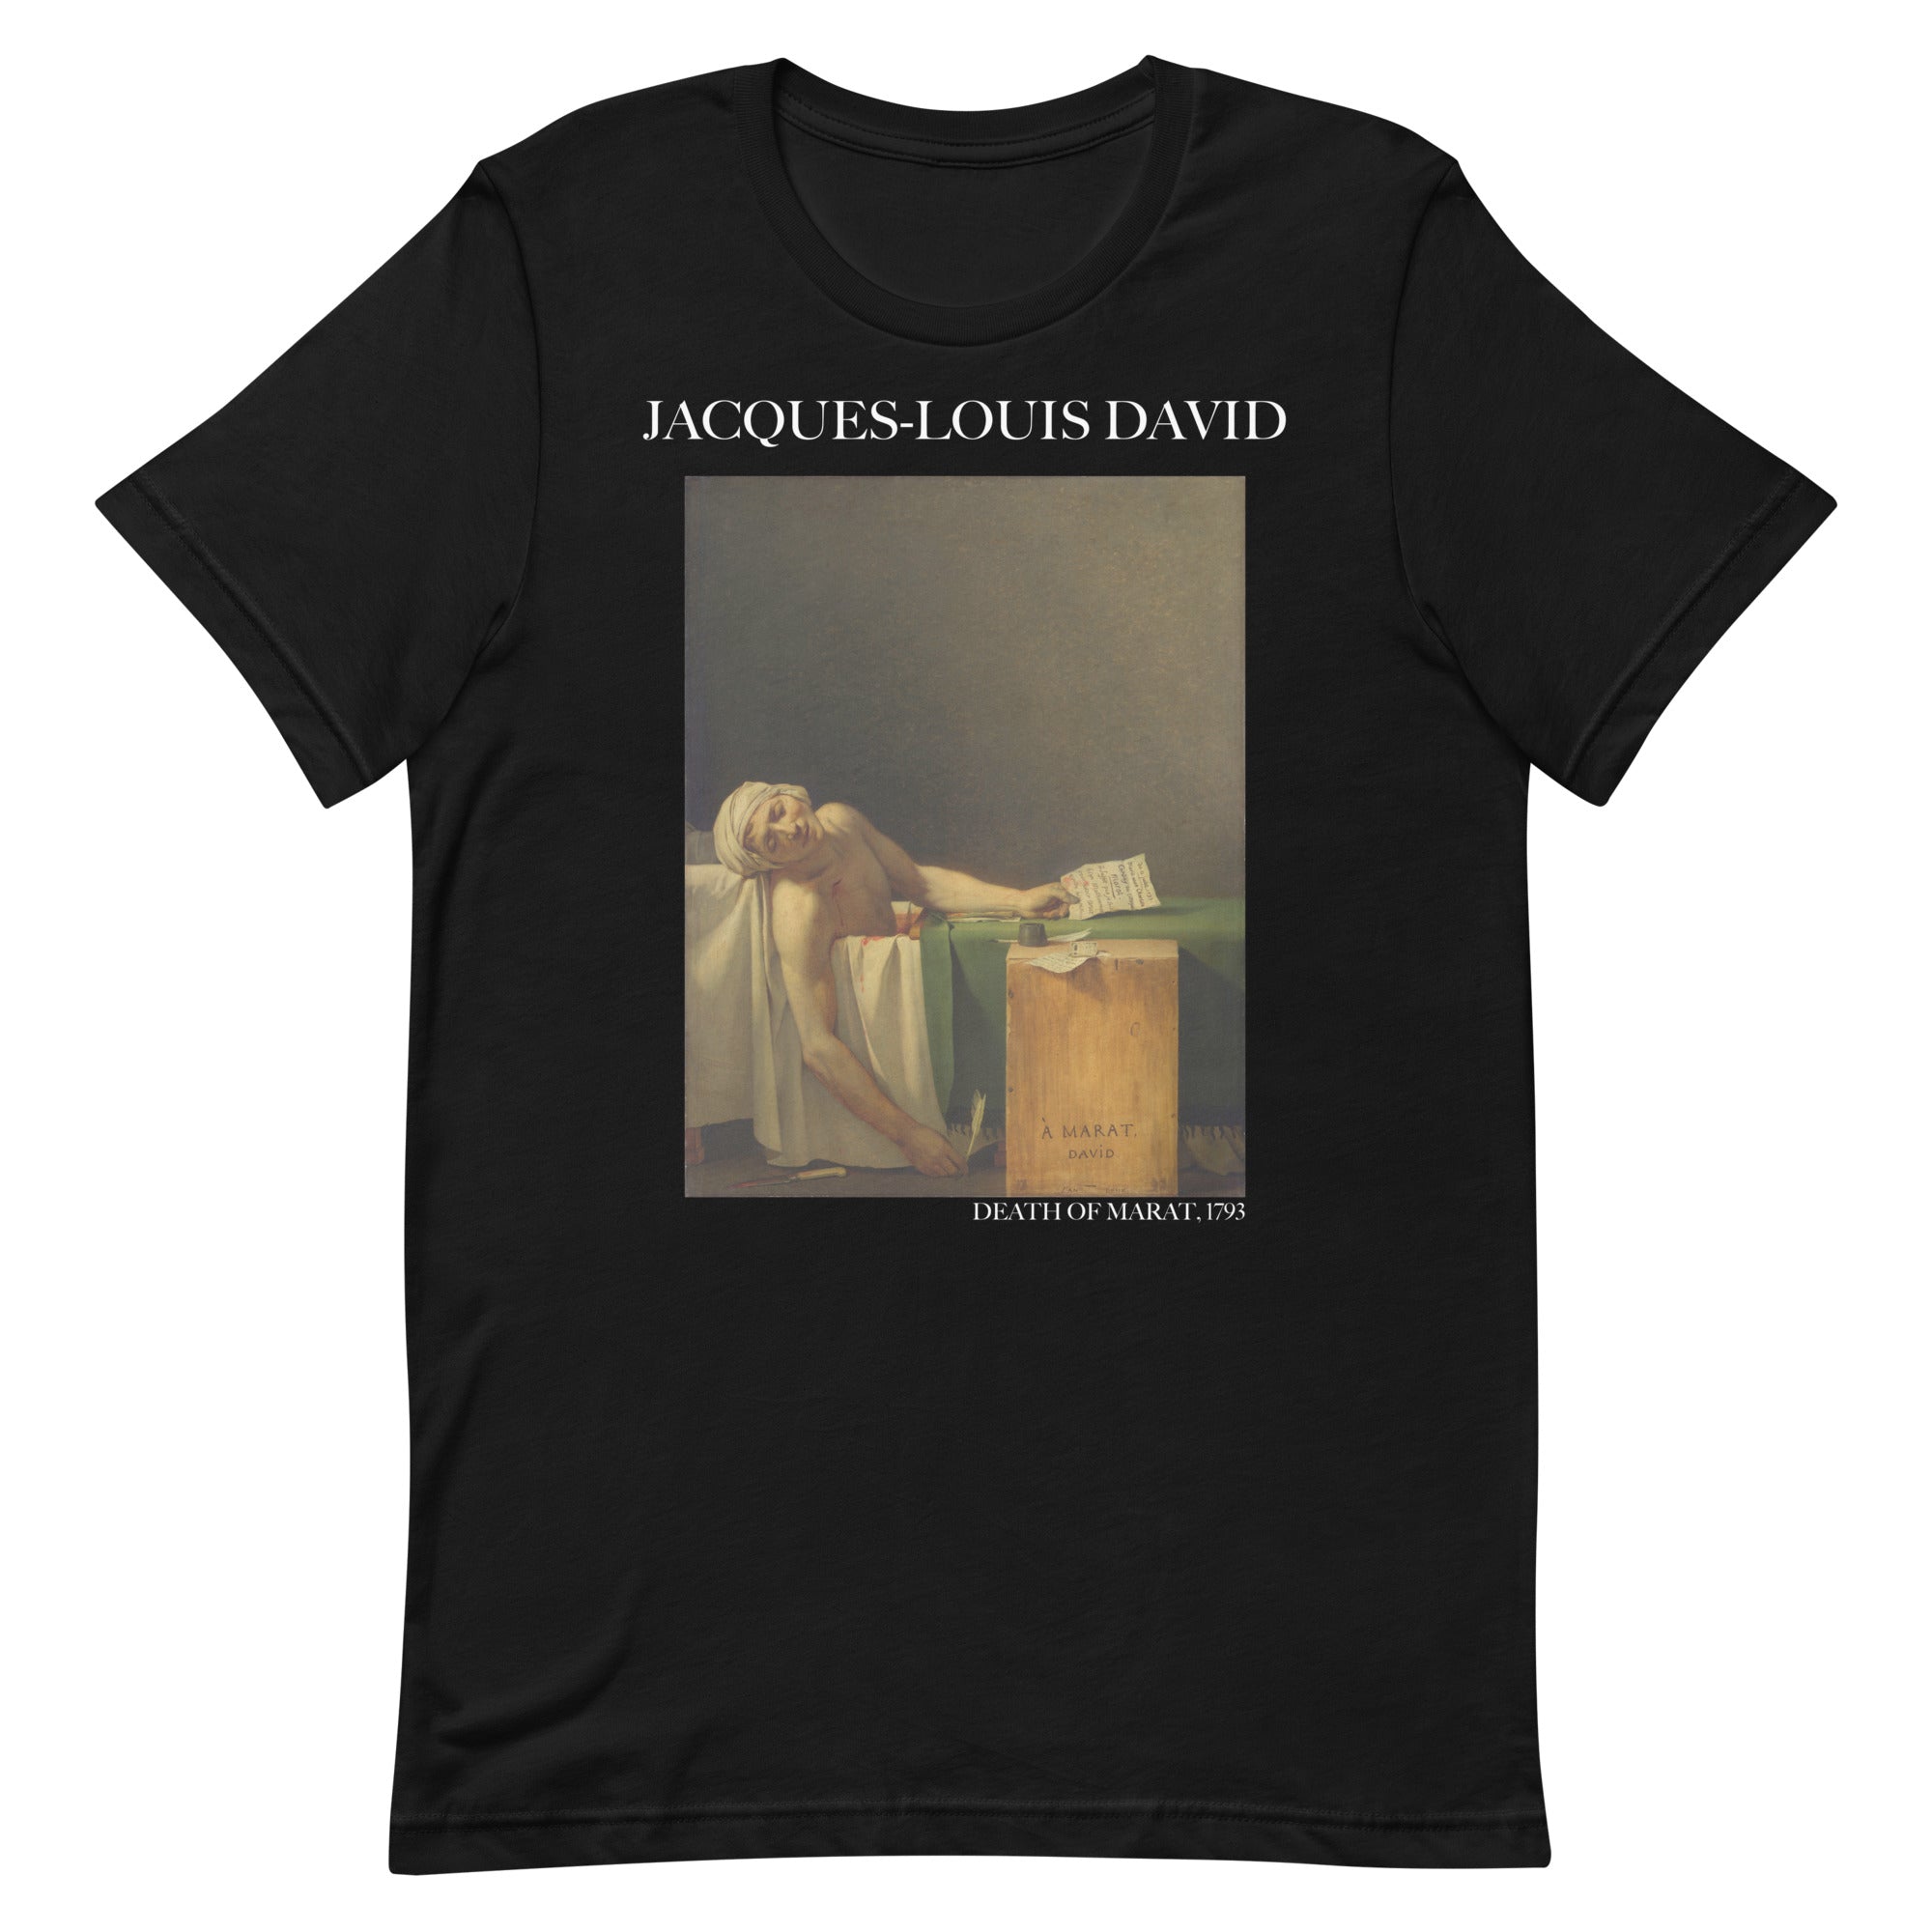 Jacques-Louis David 'Death of Marat' Famous Painting T-Shirt | Unisex Classic Art Tee